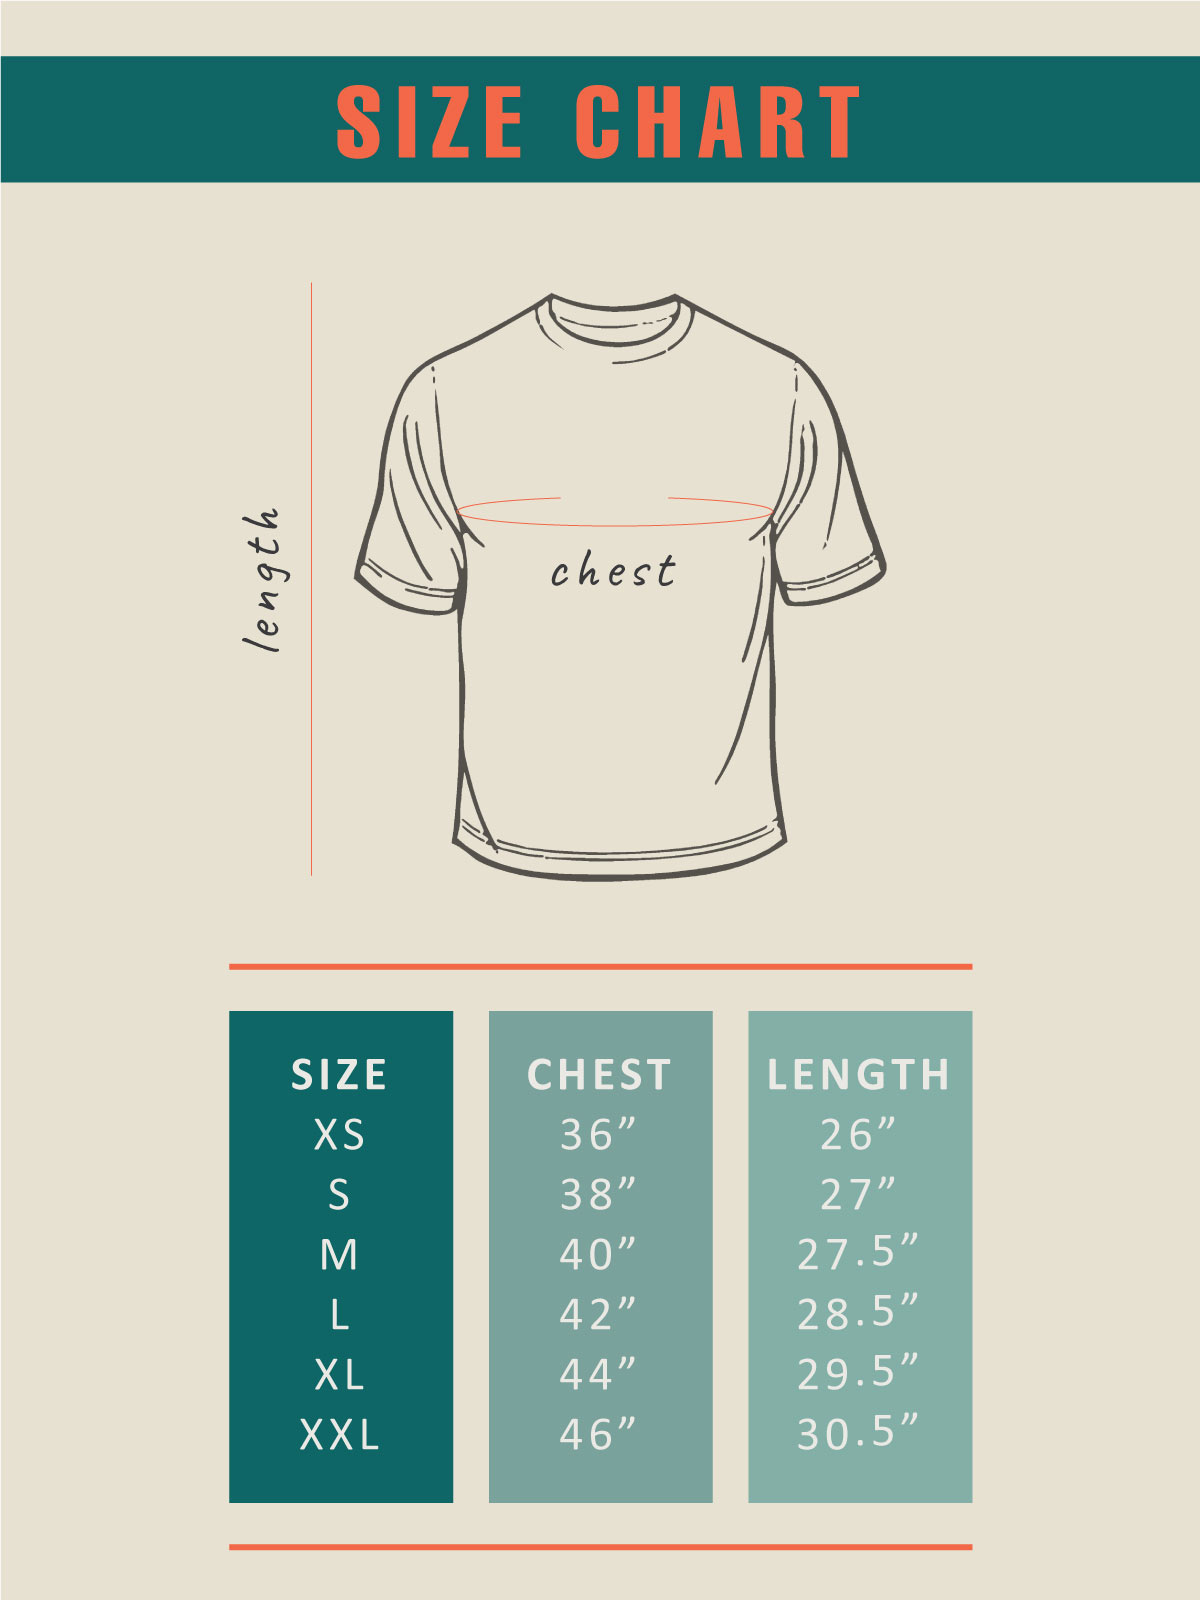 Unisex tshirts size chart by shopghumakkad